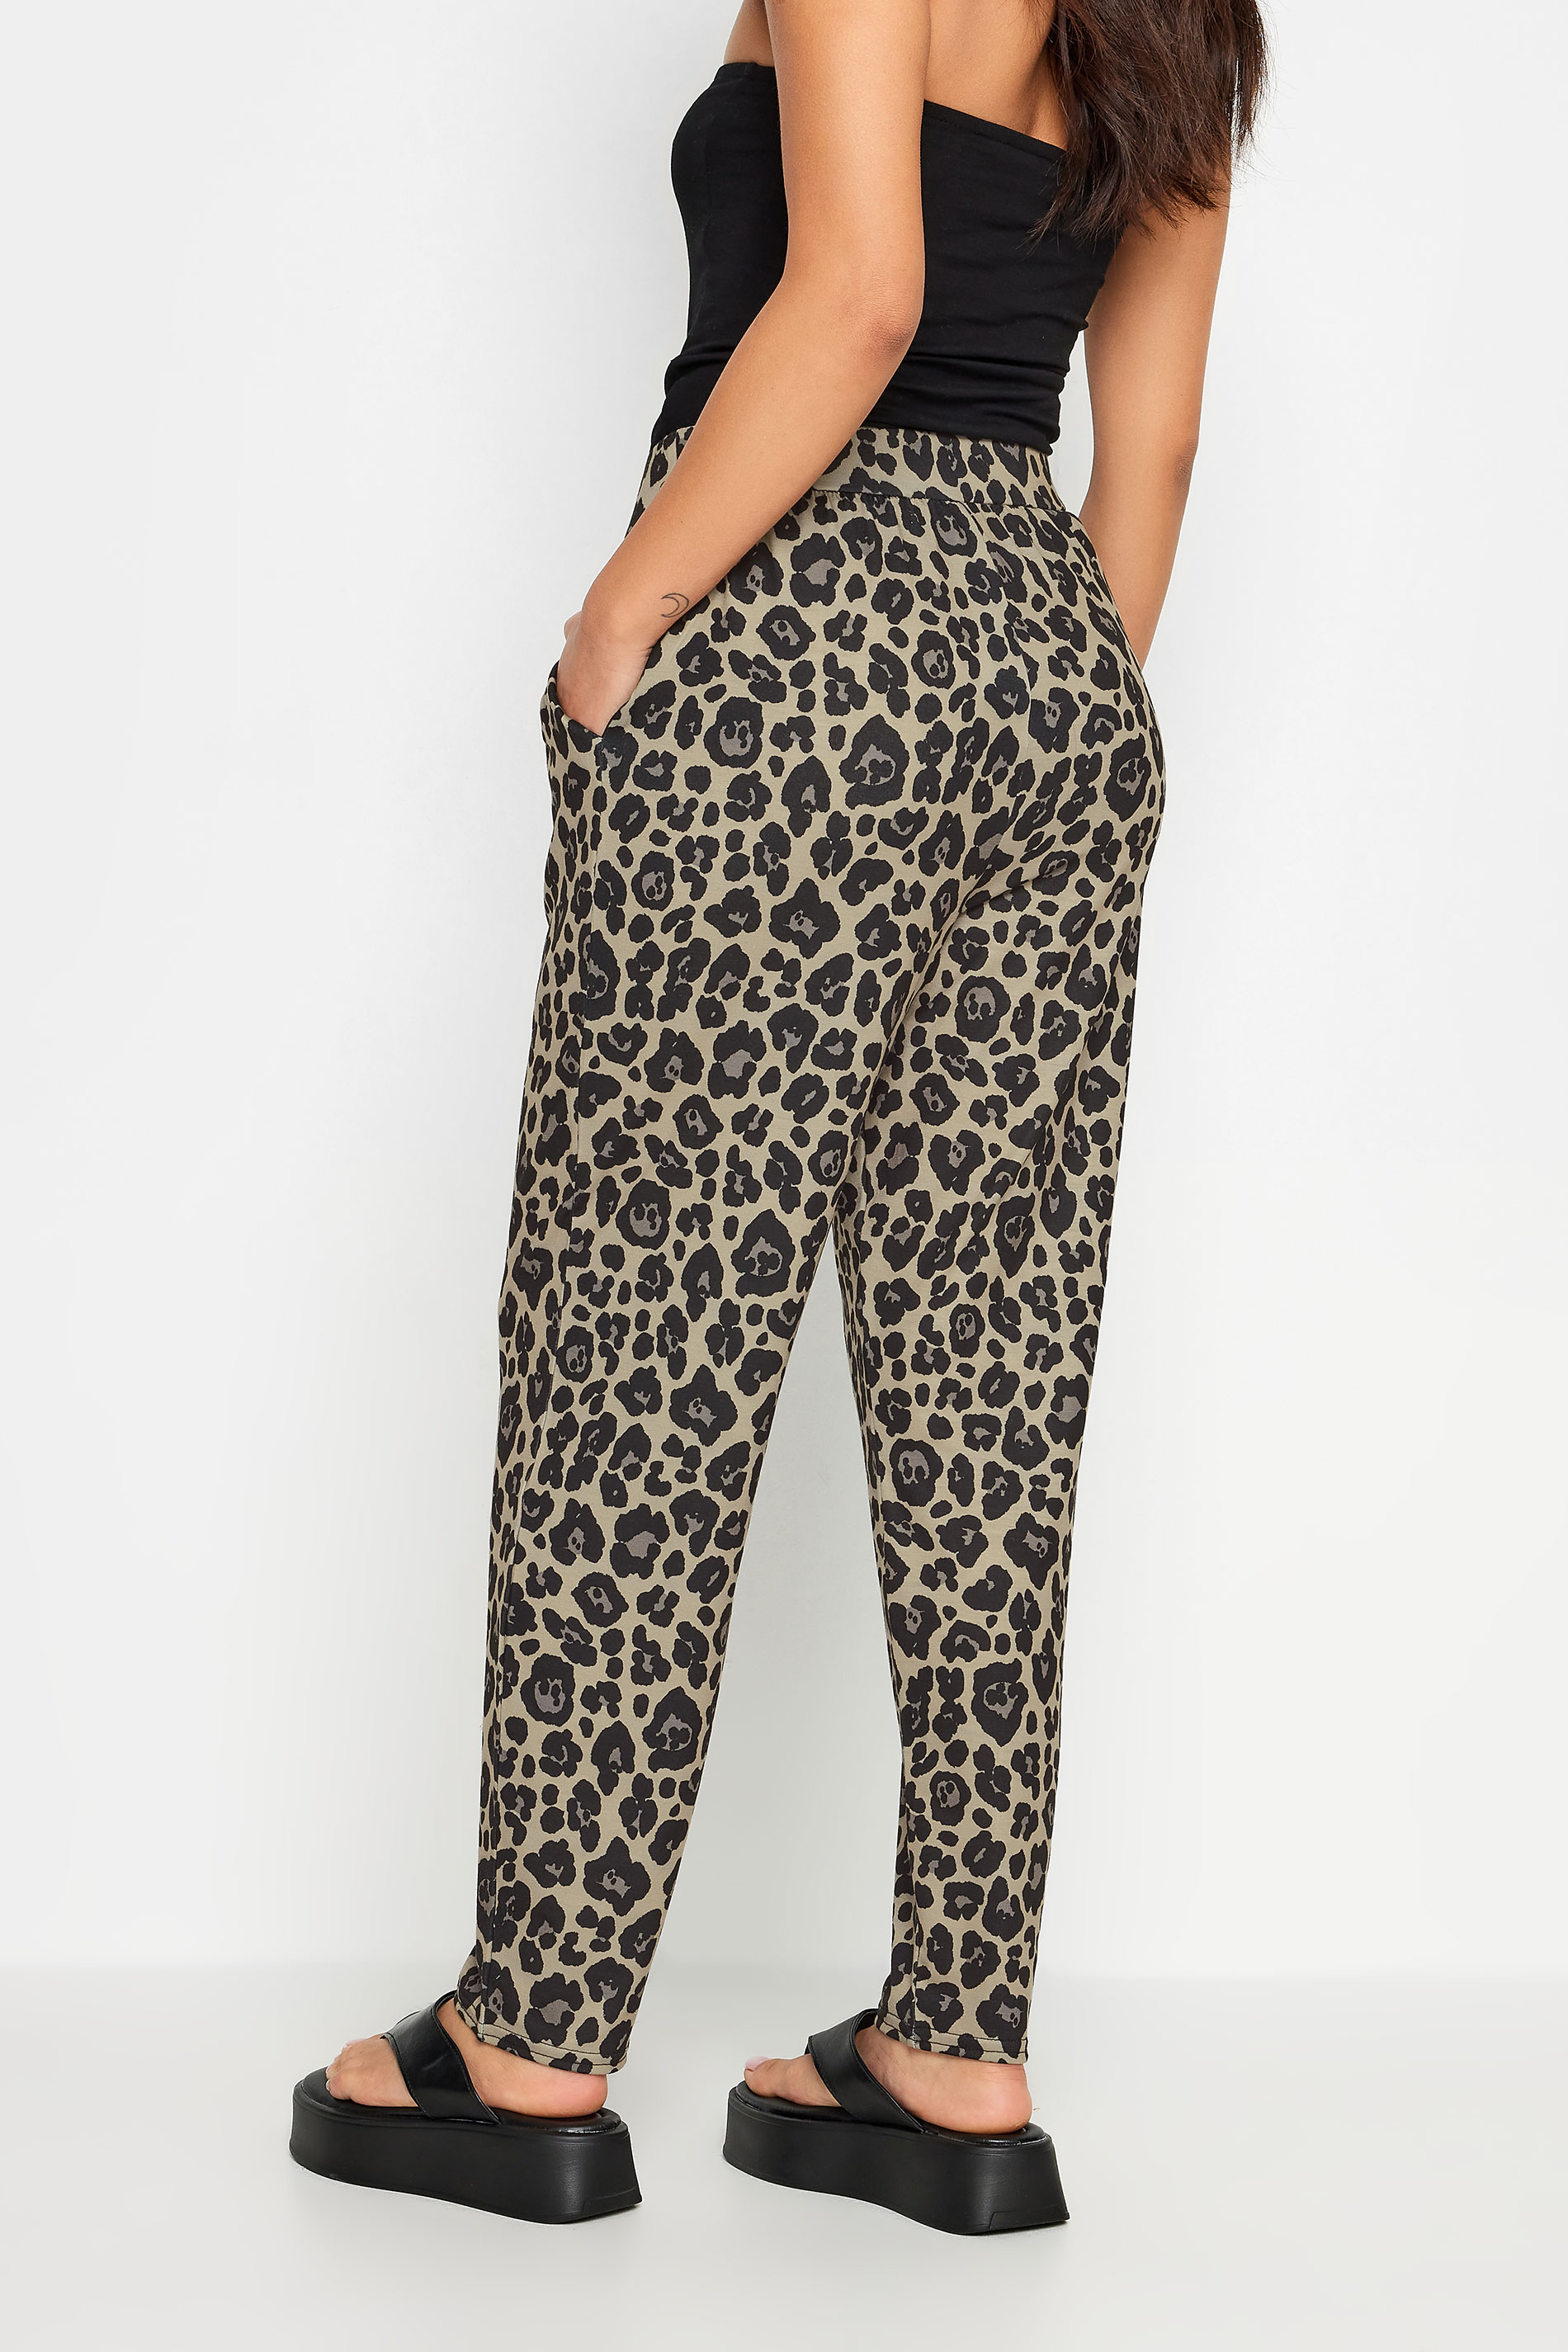 PixieGirl Petite Womens Brown Leopard Print Harem Trousers | PixieGirl 2